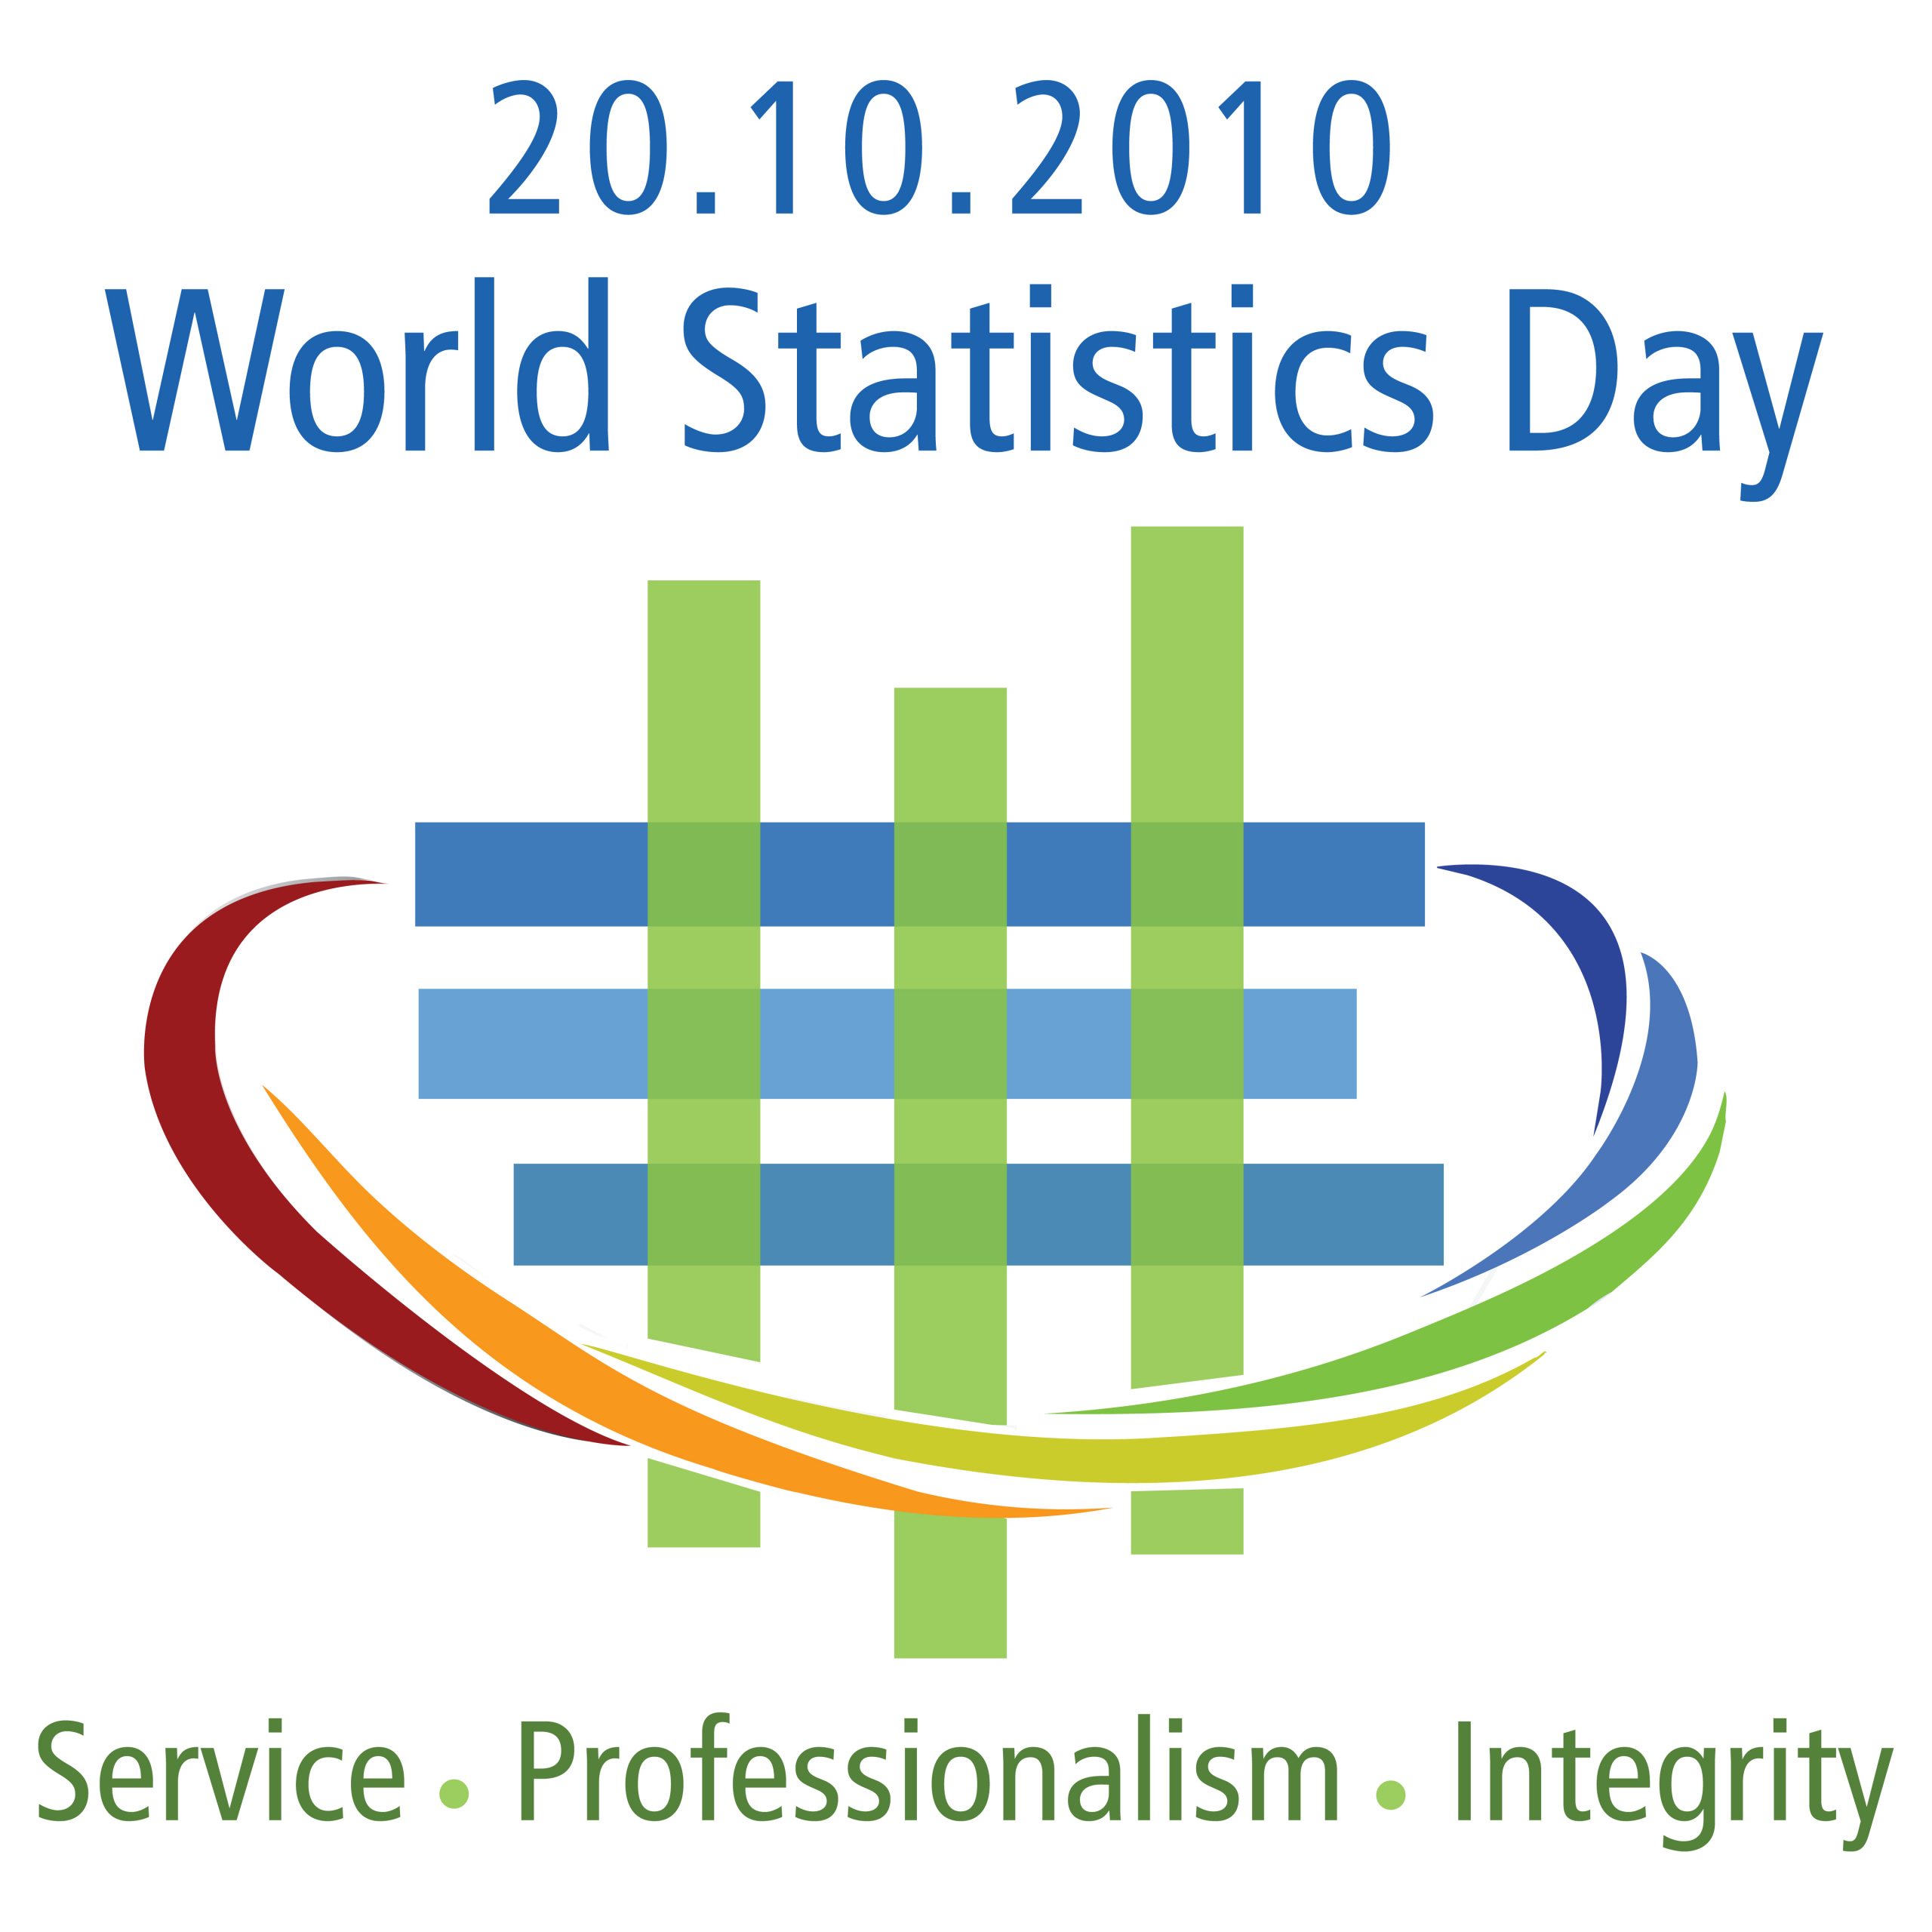 World Statistics Day 2015